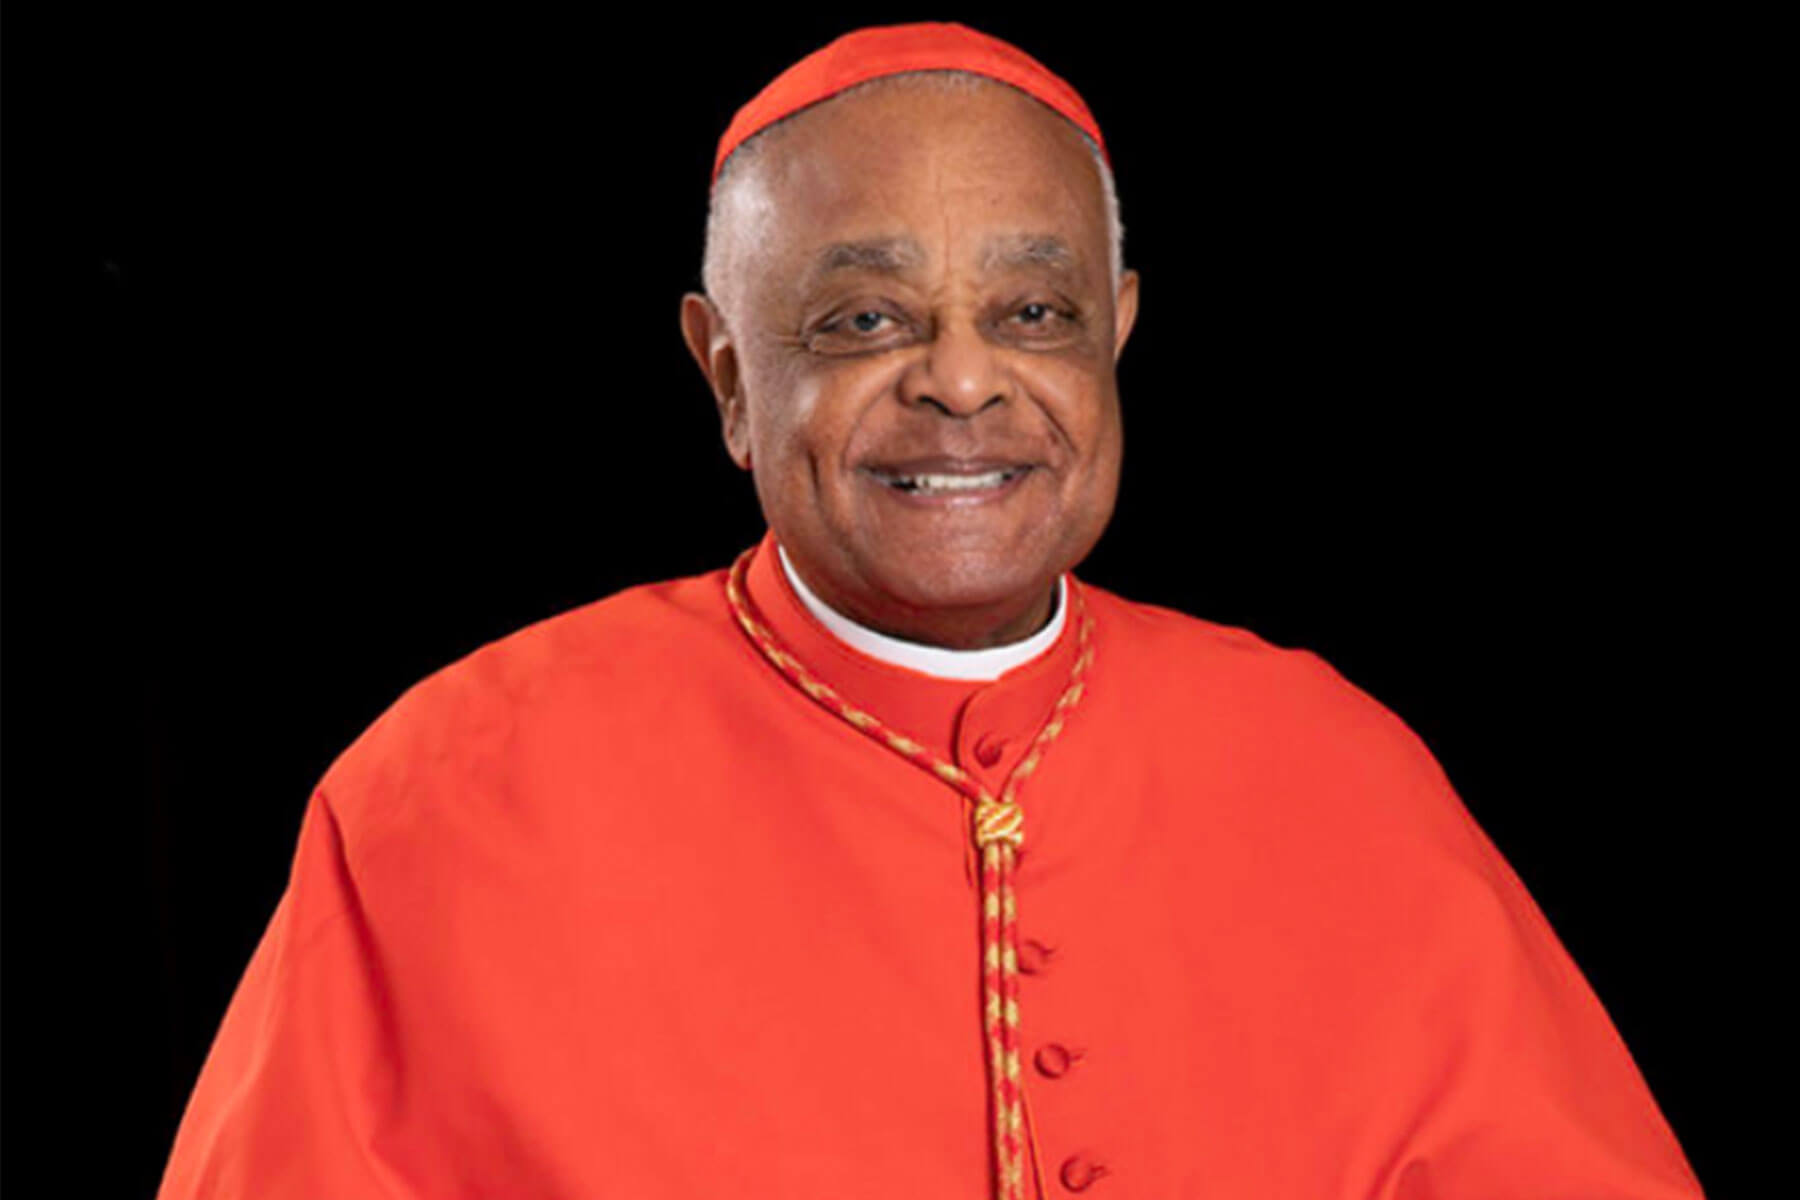 Cardinal Gregory headshot